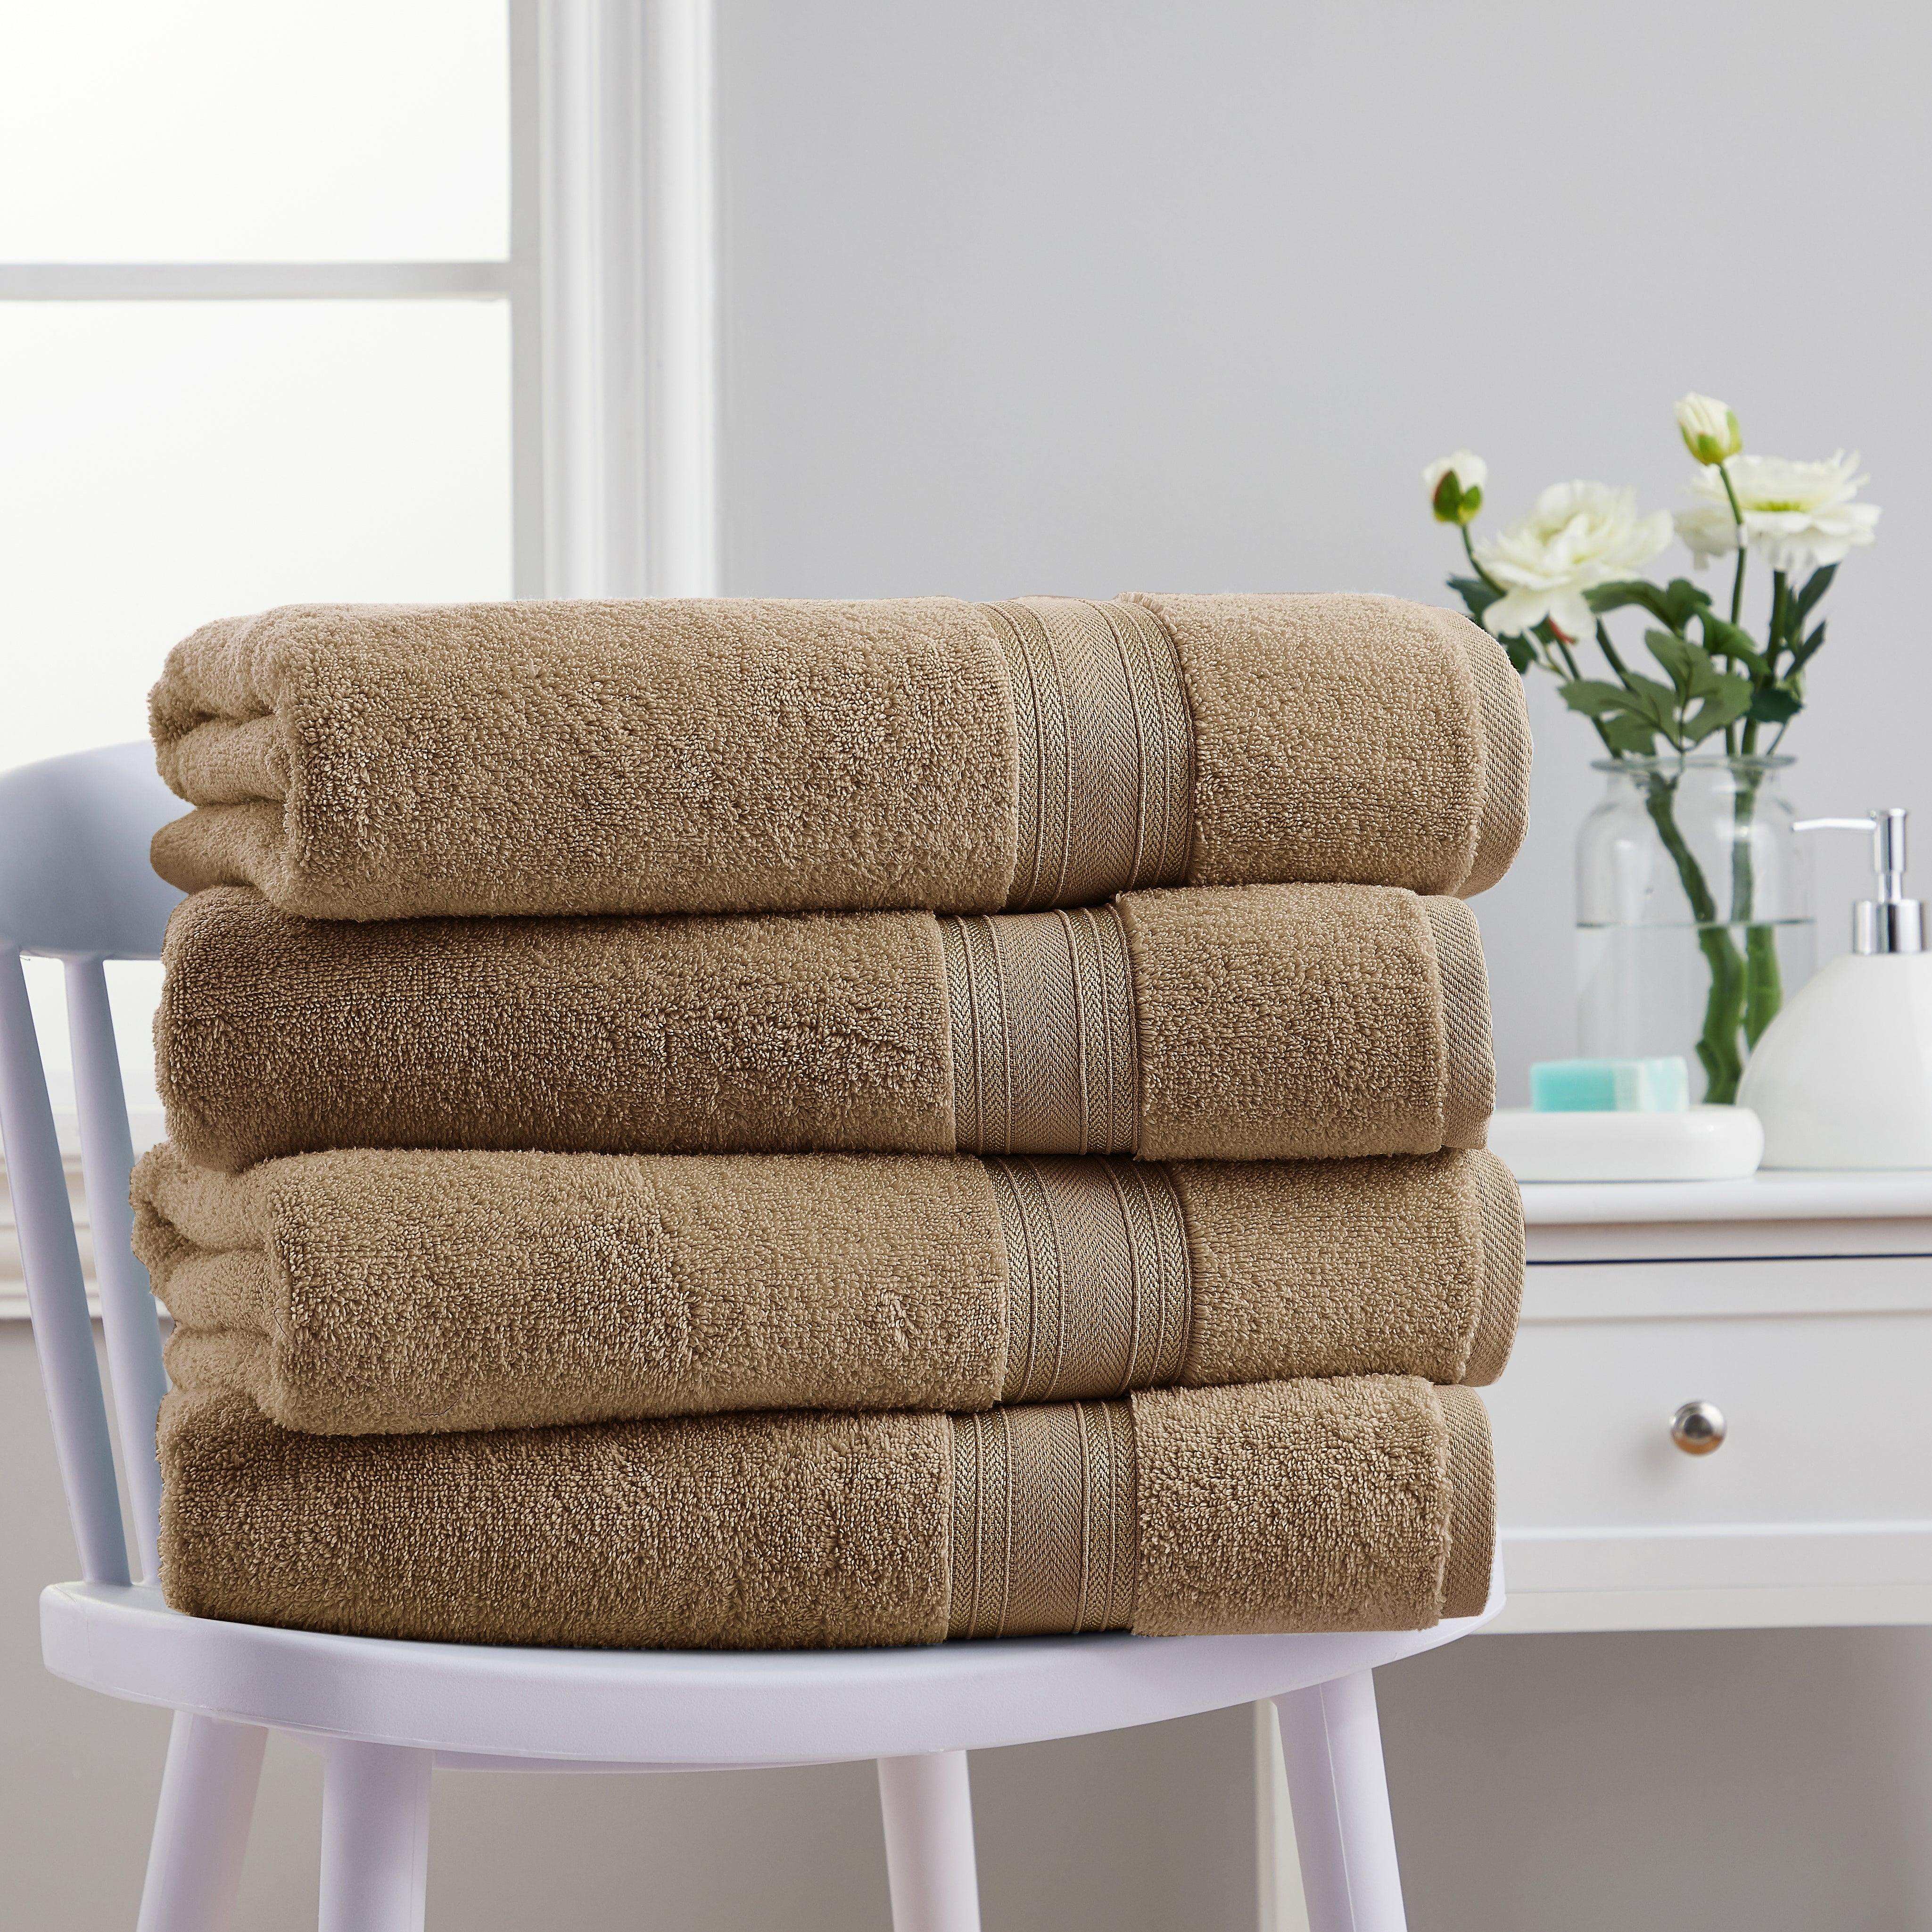 4 Piece Cotton Bath Towels Set | Spirit Linen -  Hummus